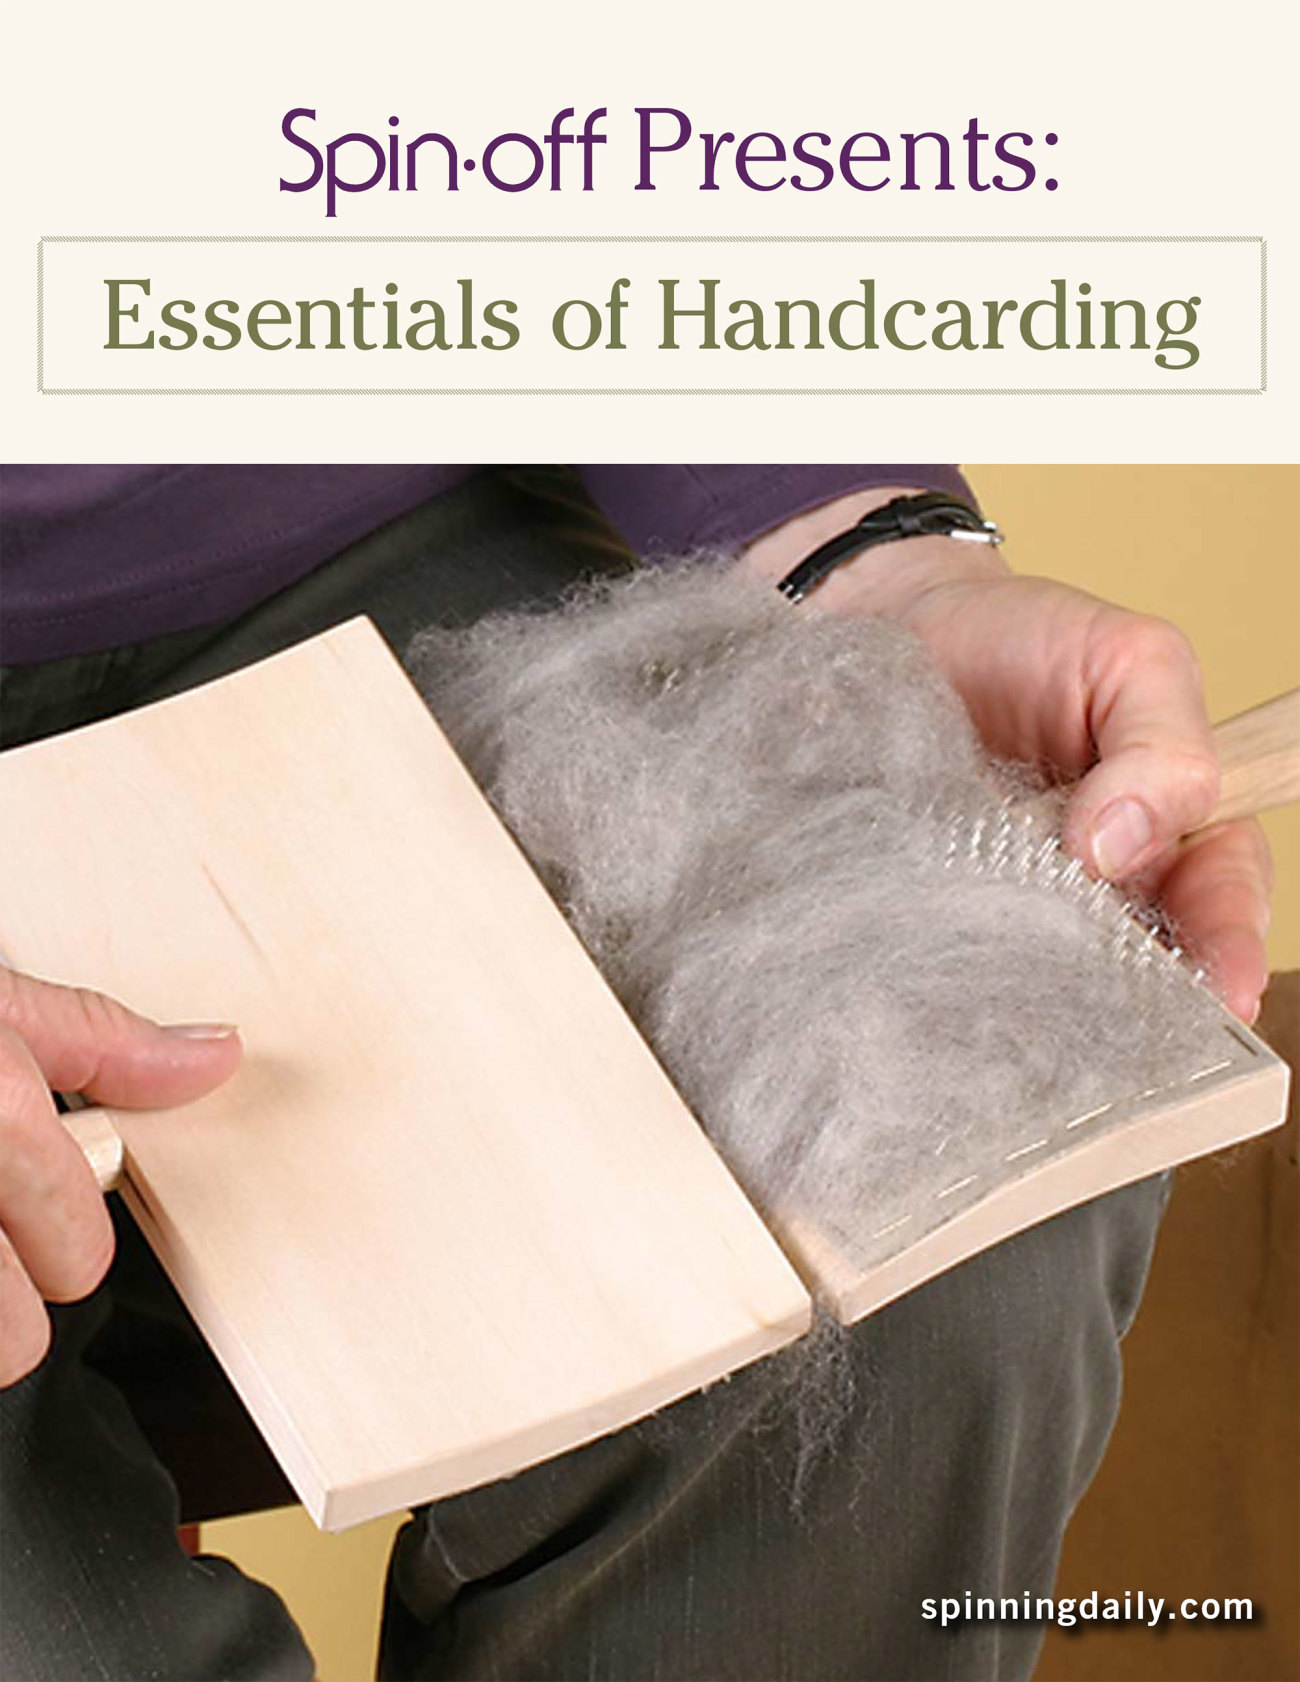 Essentials of Handcarding cover